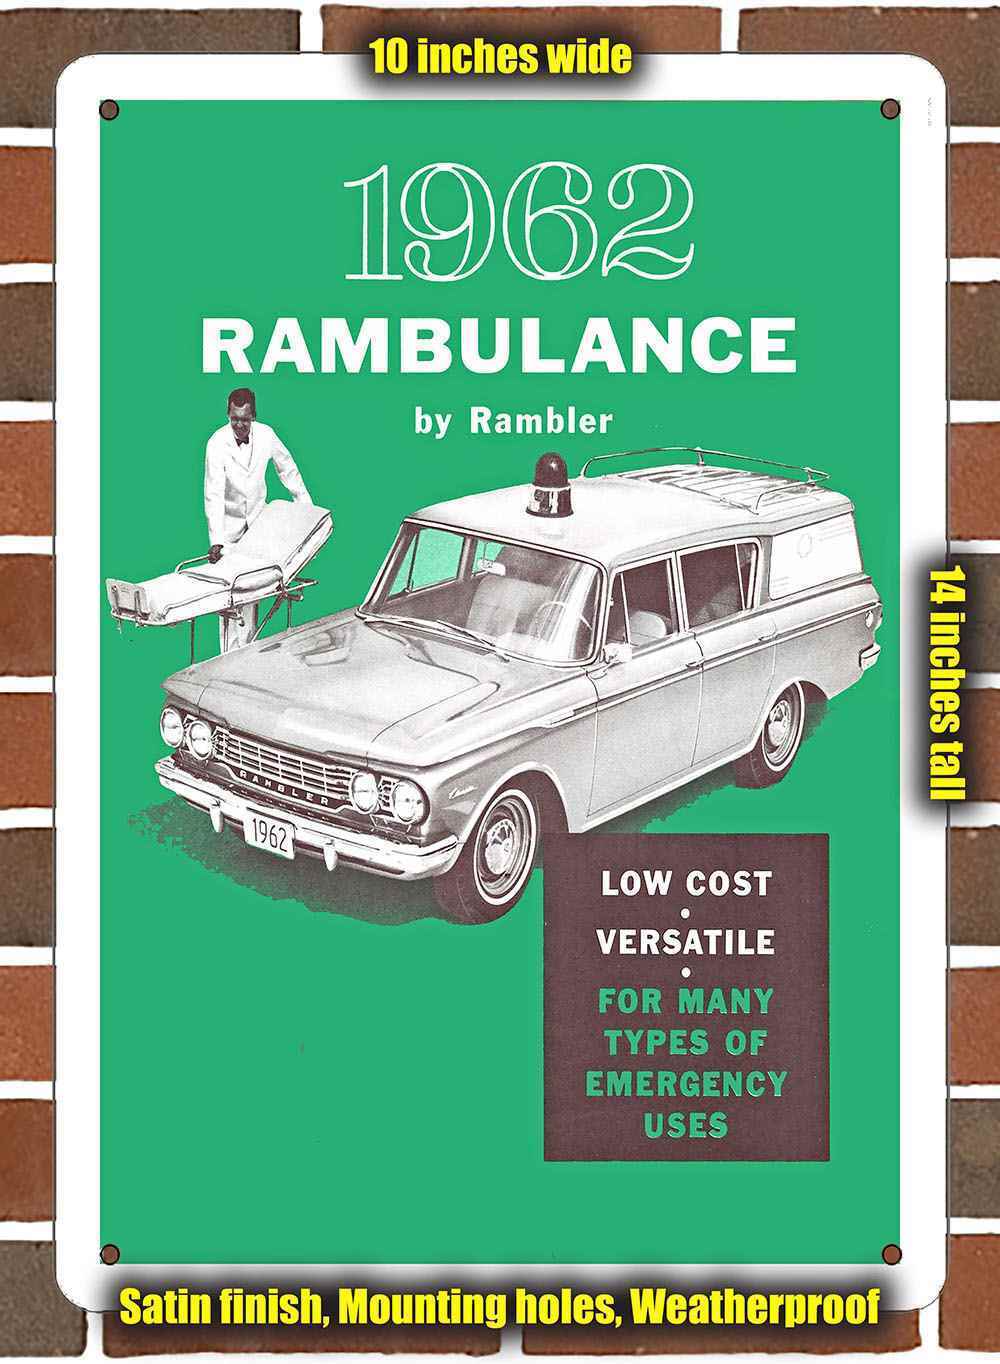 Metal Sign - 1962 Rambler Ambulance- 10x14 inches